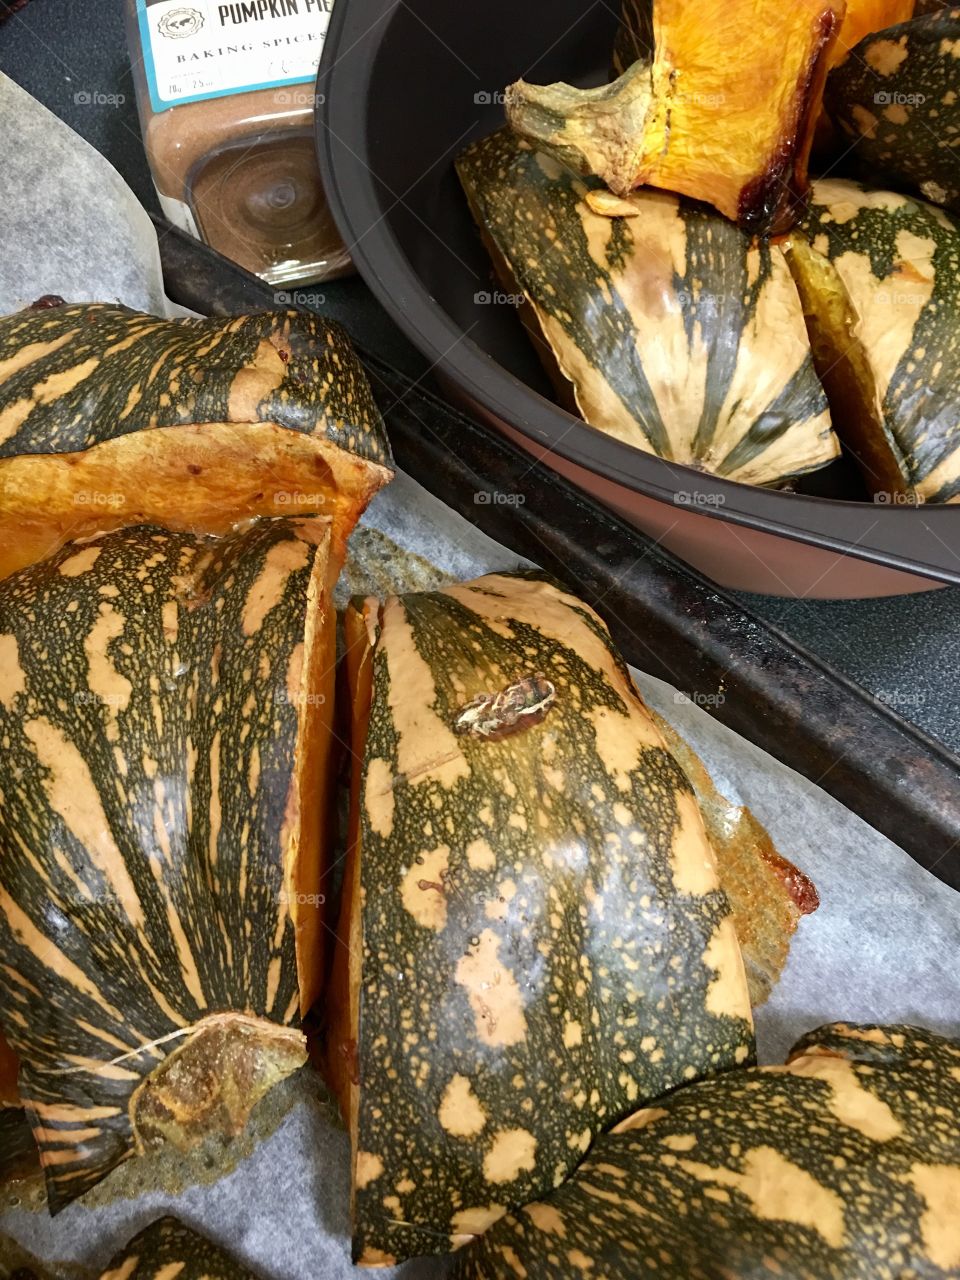 Pumpkin pie food preparation ingredients. Fresh roasted squash pumpkin and spice 